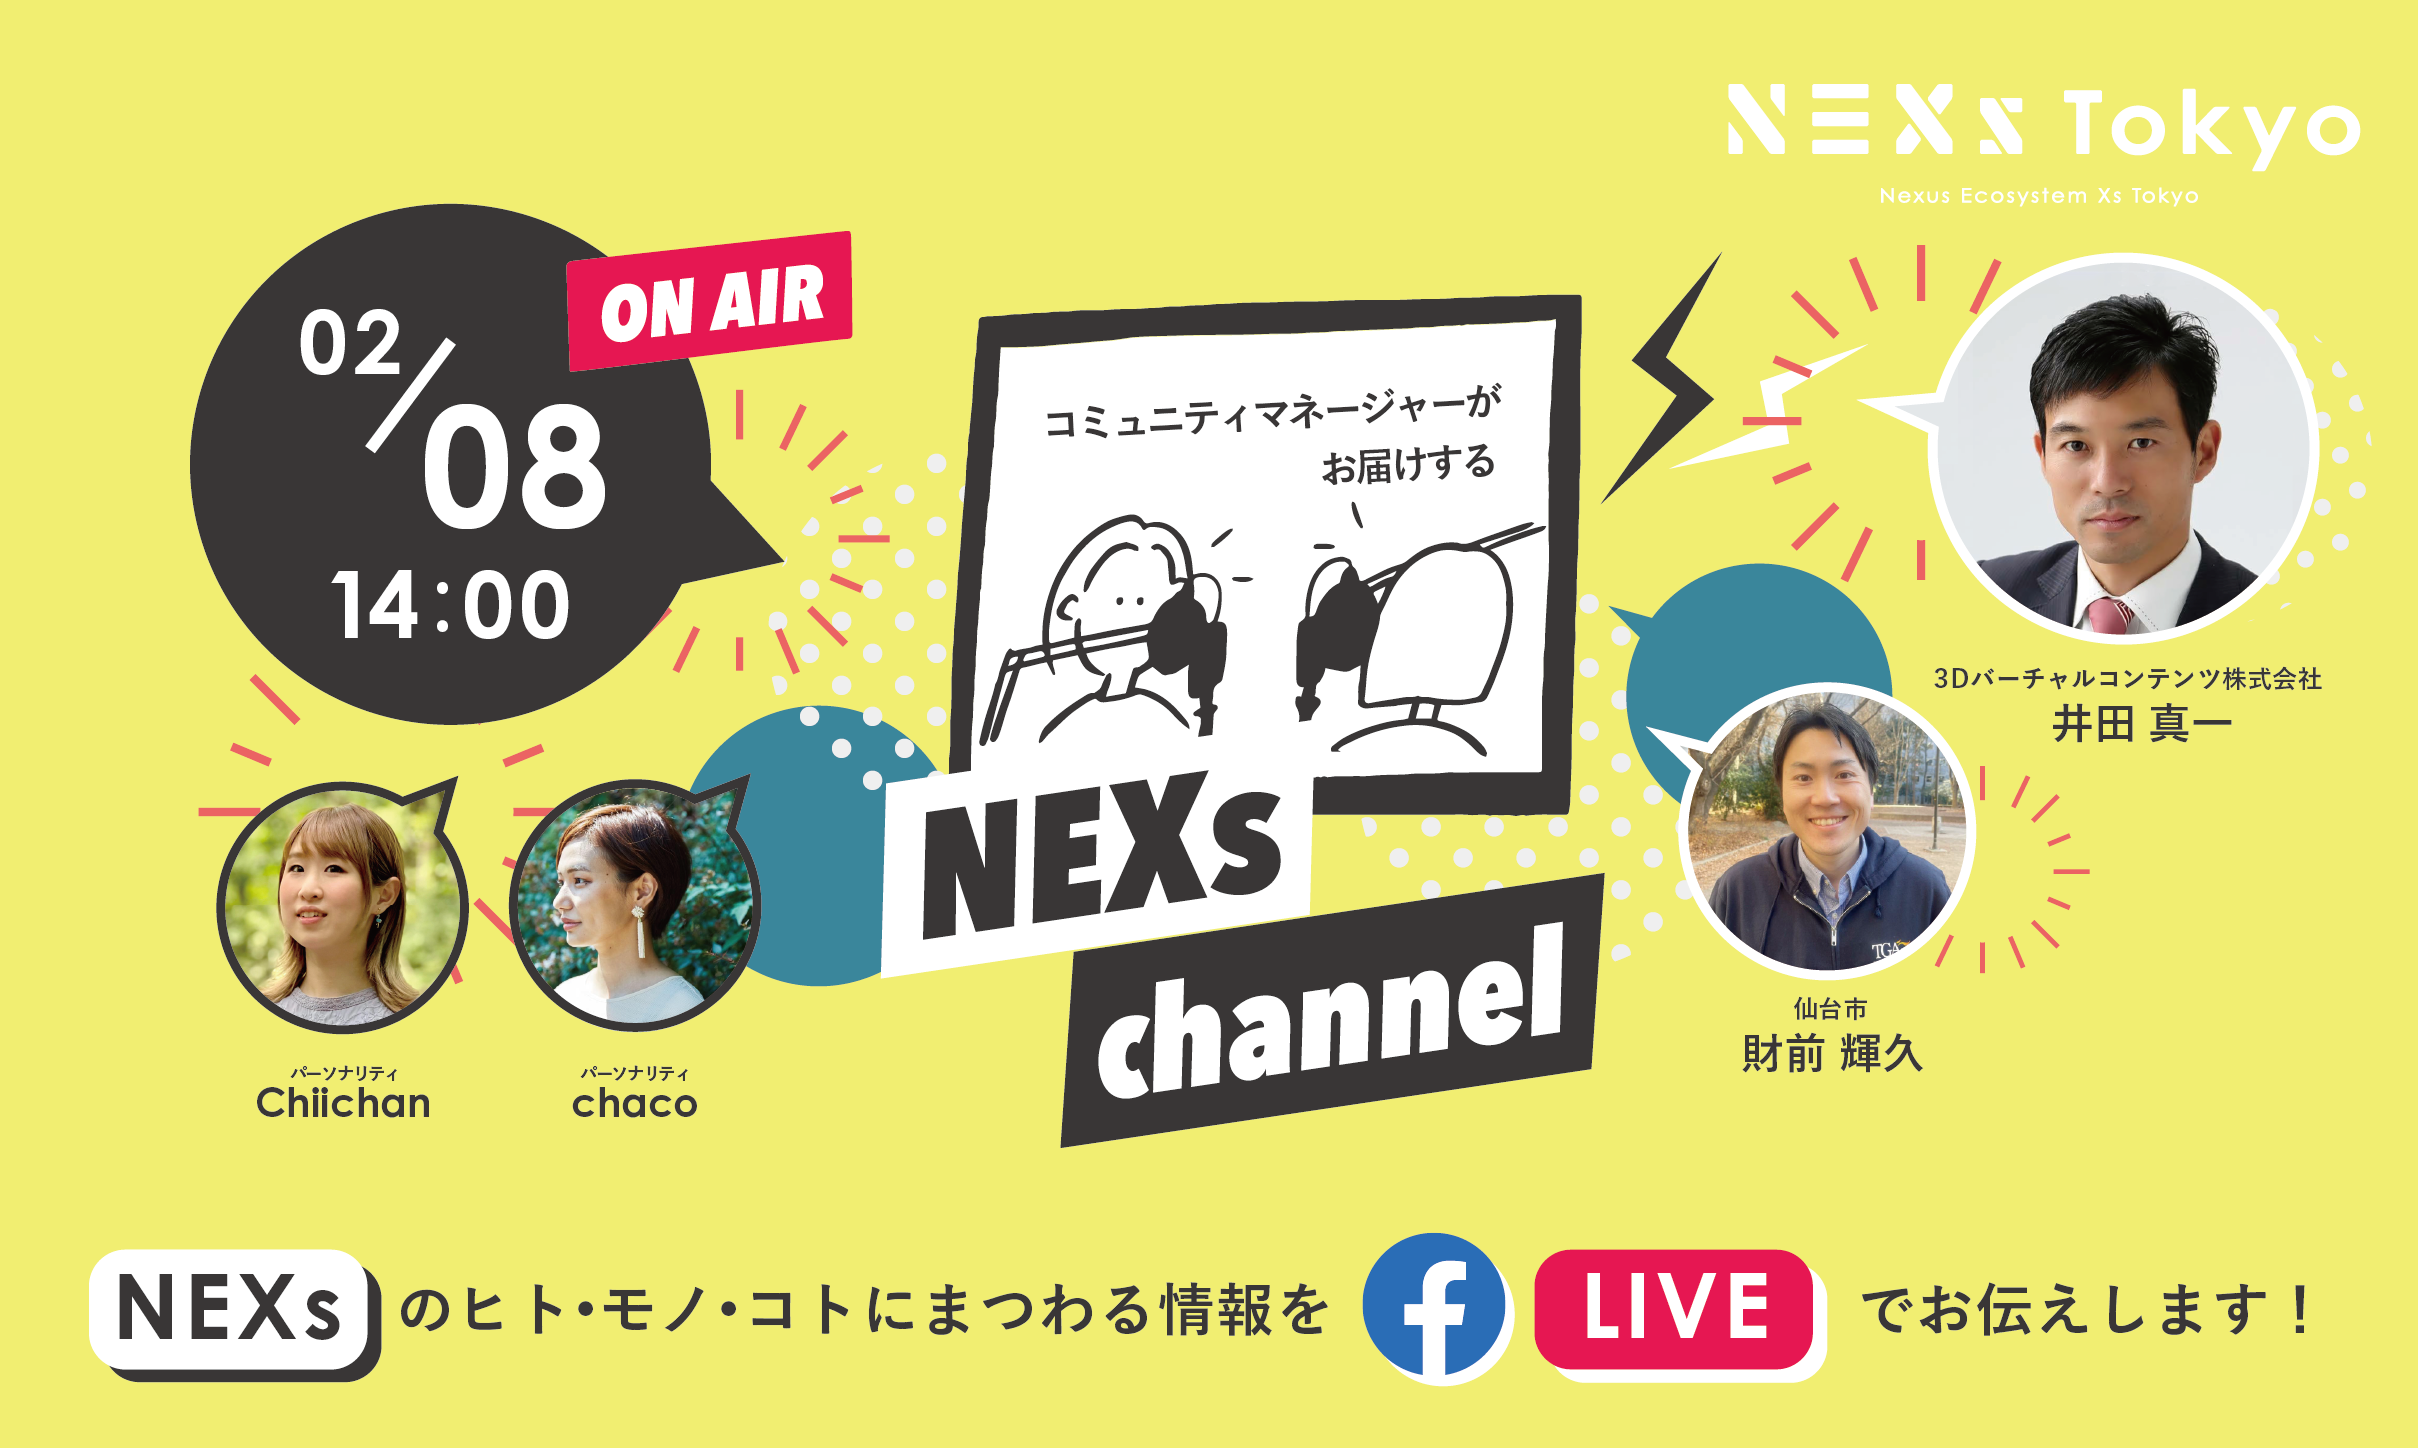 NEXs channel #26 -NEXs Tokyoのヒト・モノ・コトを特設ラジオブースから生放送でお届け！-